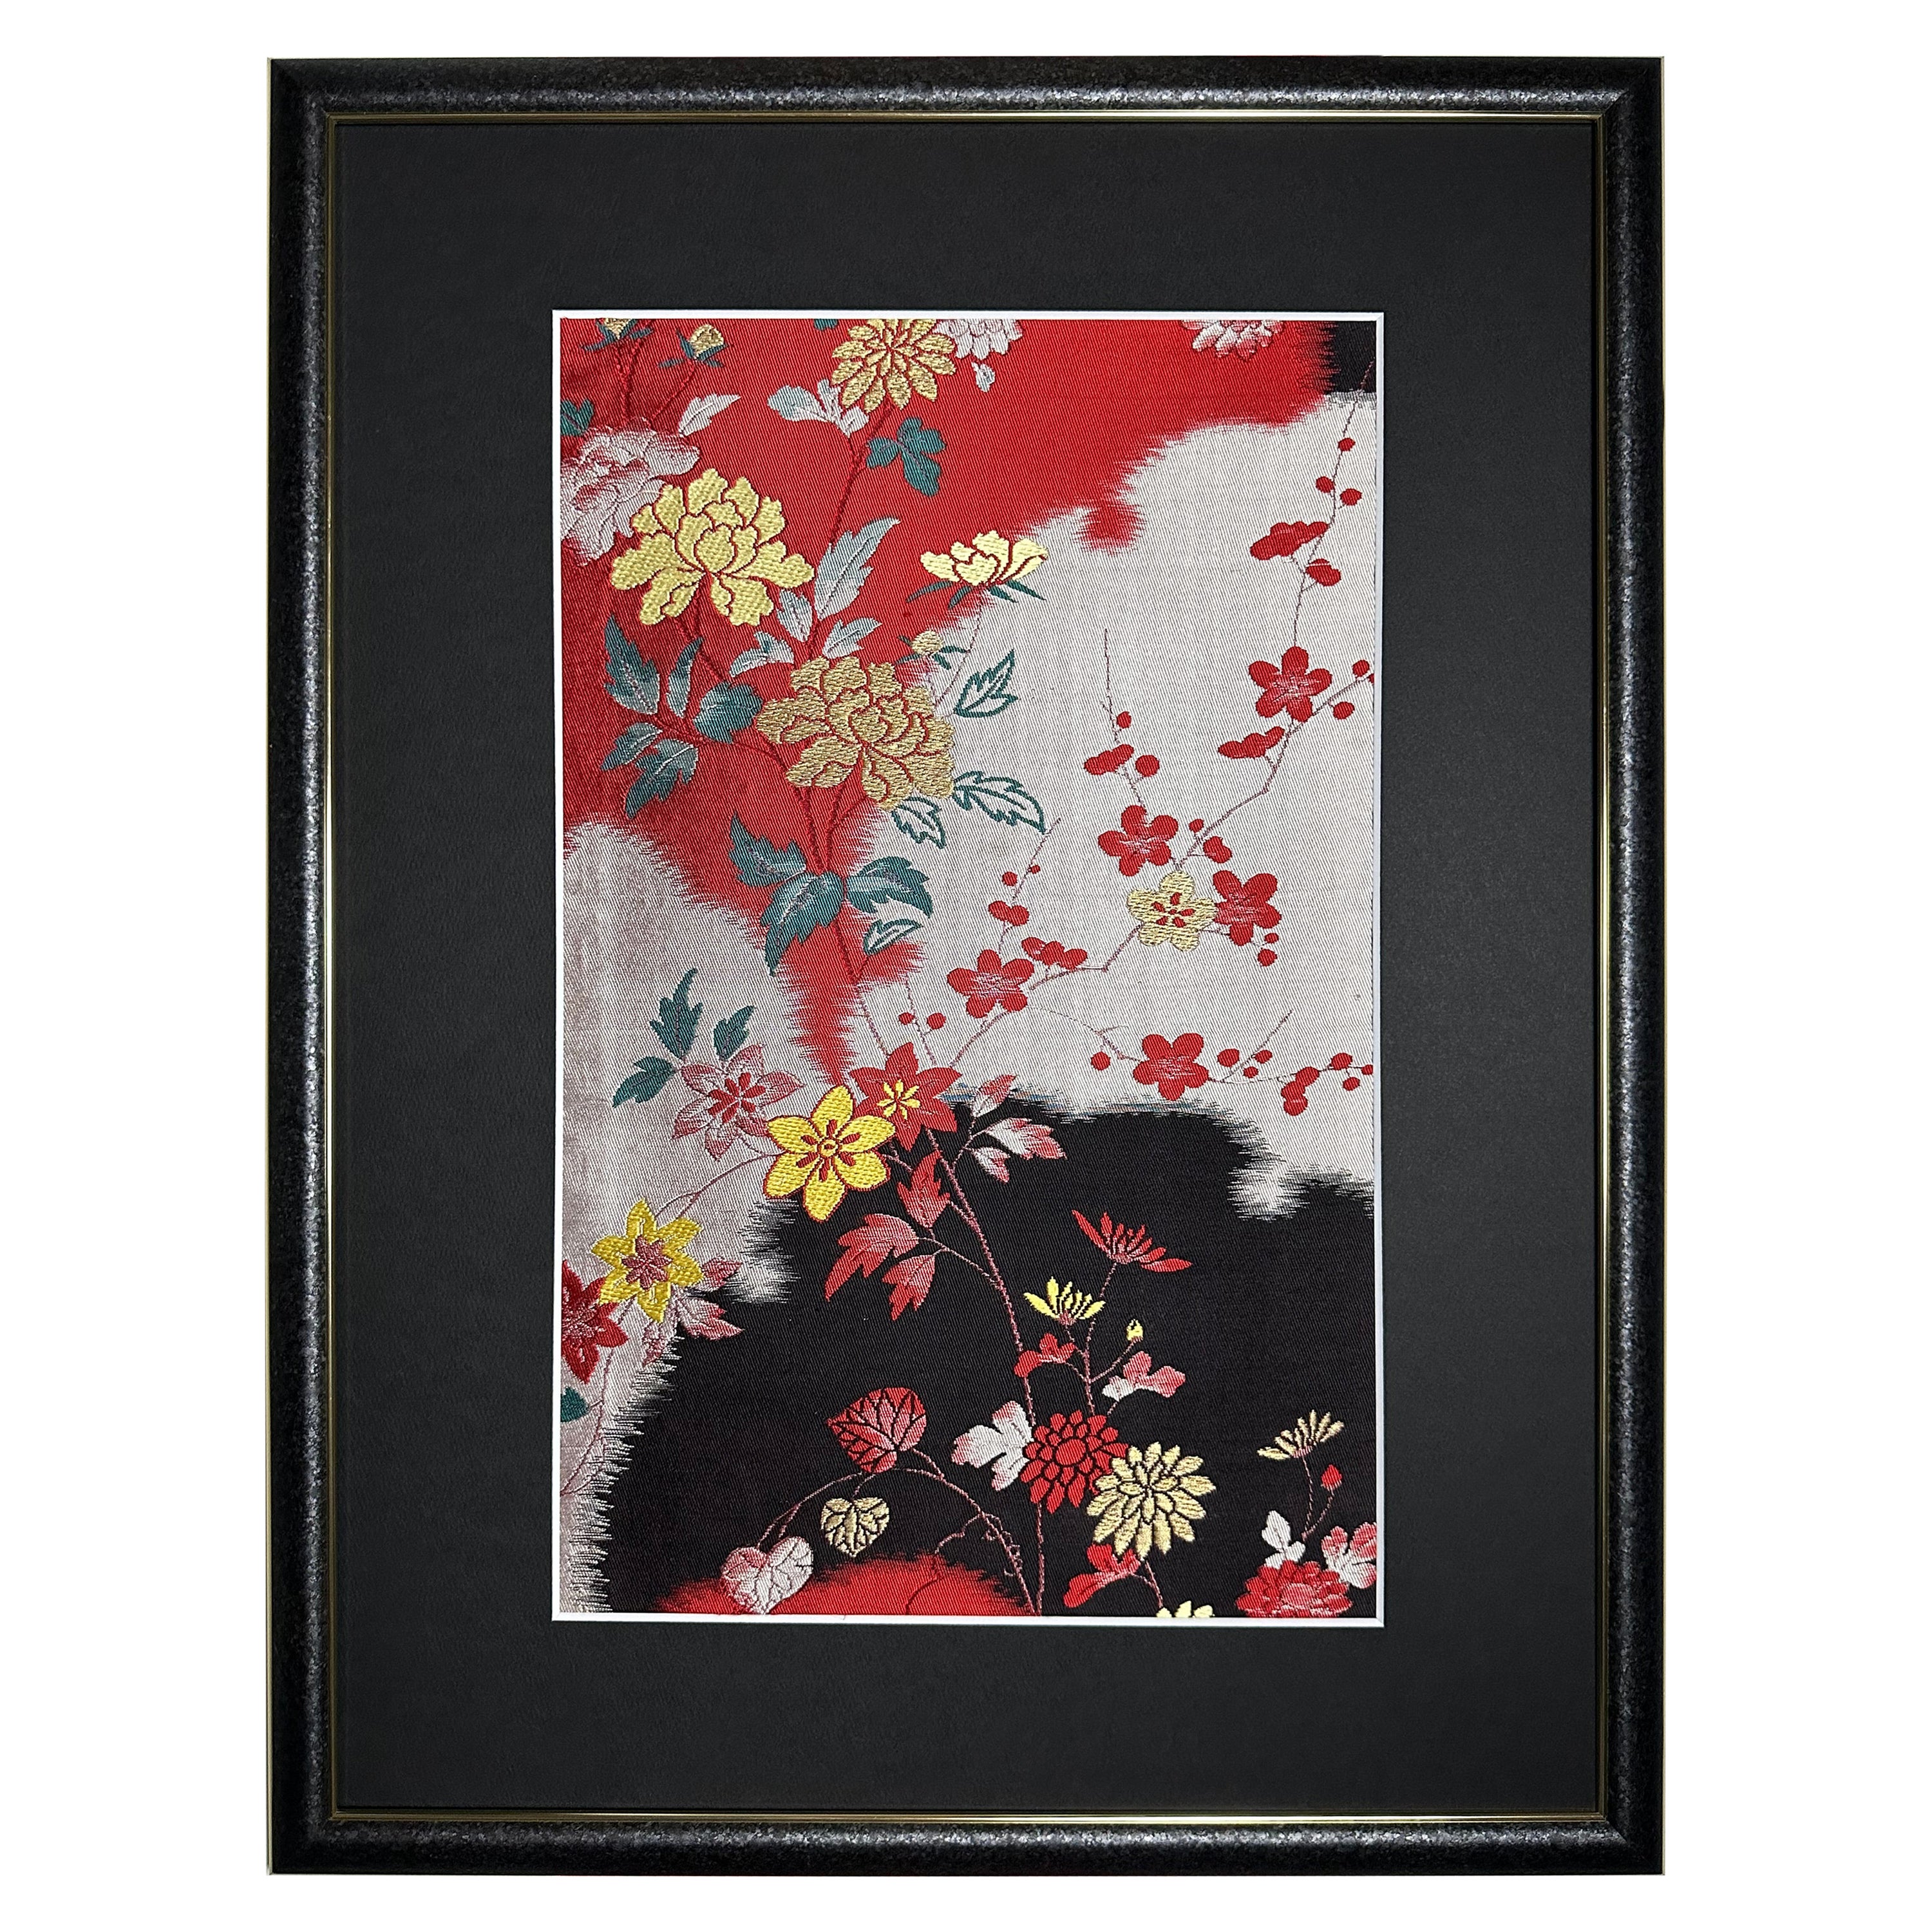 Framed Kimono Art "Seasonal Blessings" by Kimono-Couture, Japanese Textile Art